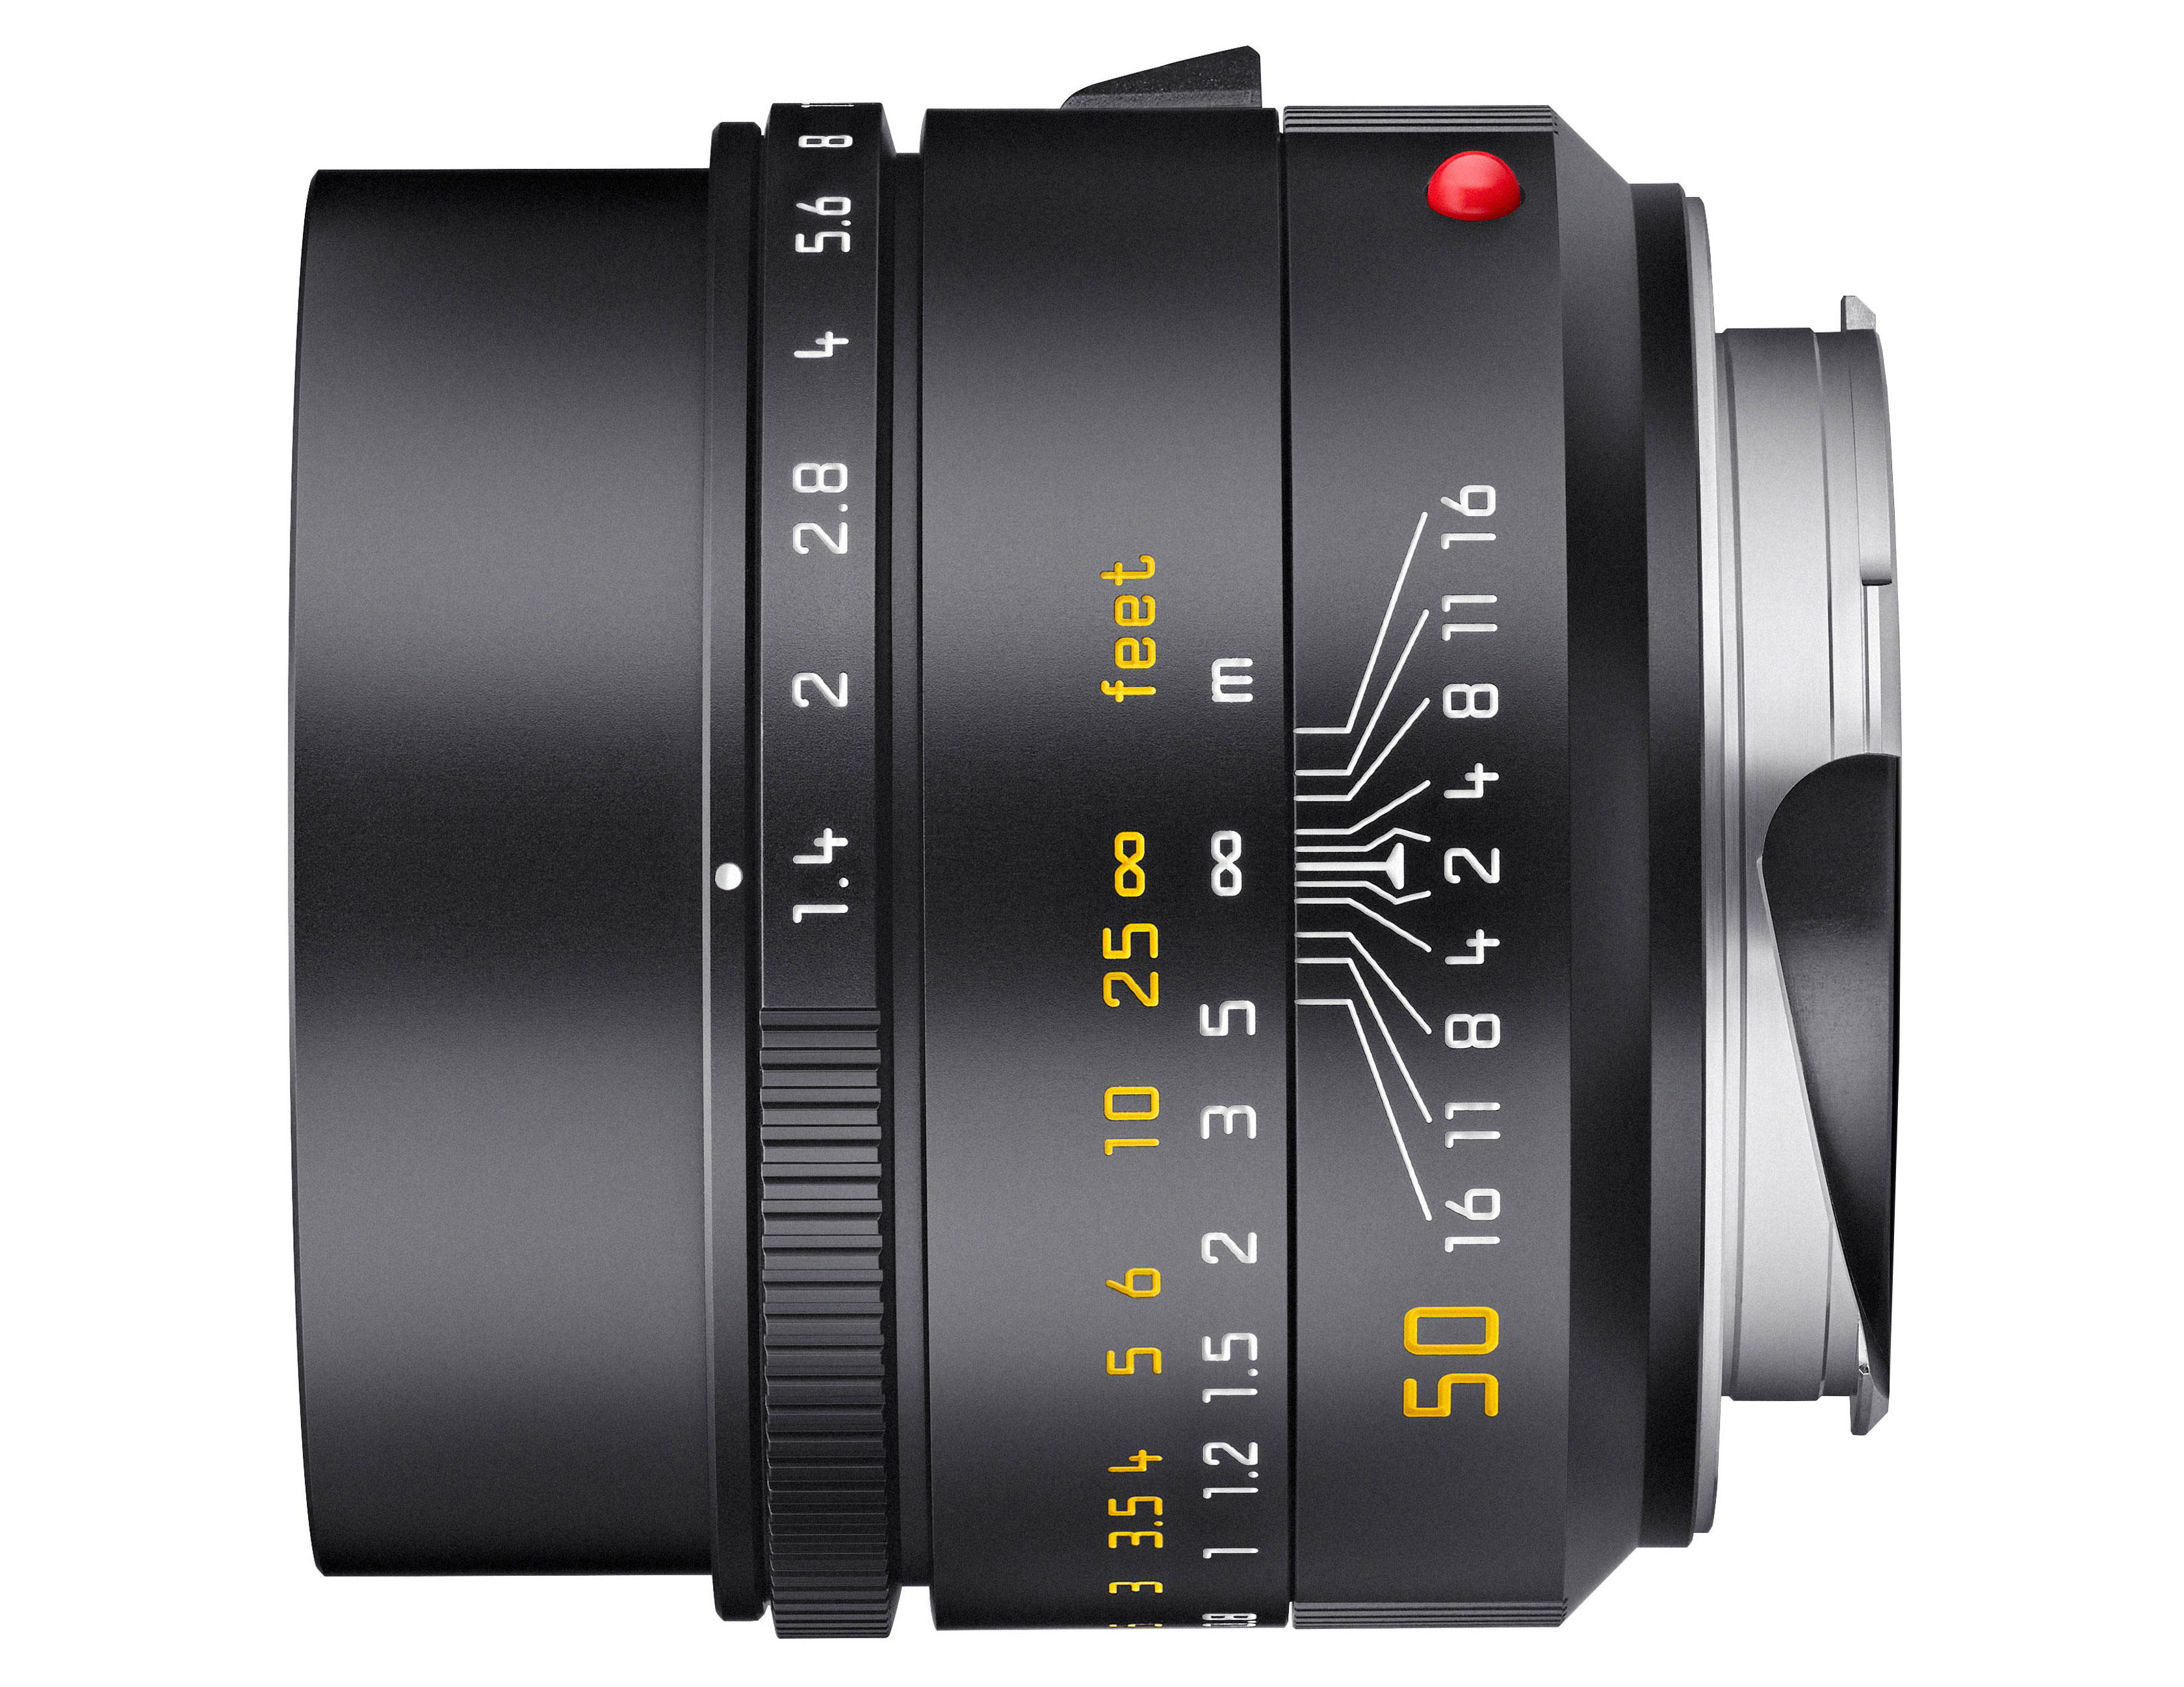 Leica Summilux-M 50mm F1.4 ASPH (2023)